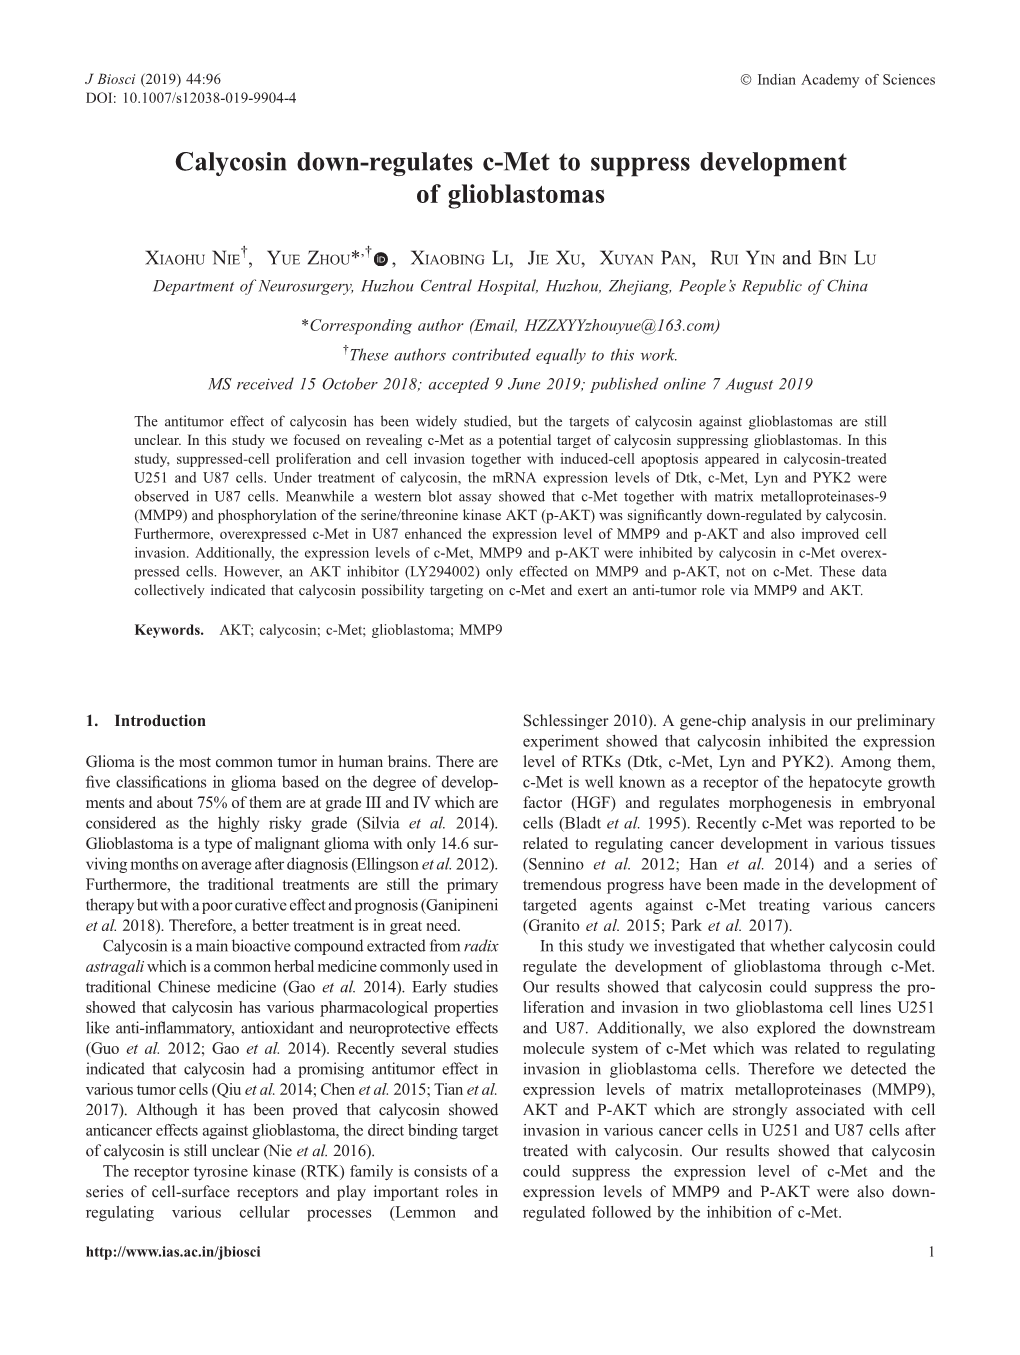 Calycosin Down-Regulates C-Met to Suppress Development of Glioblastomas